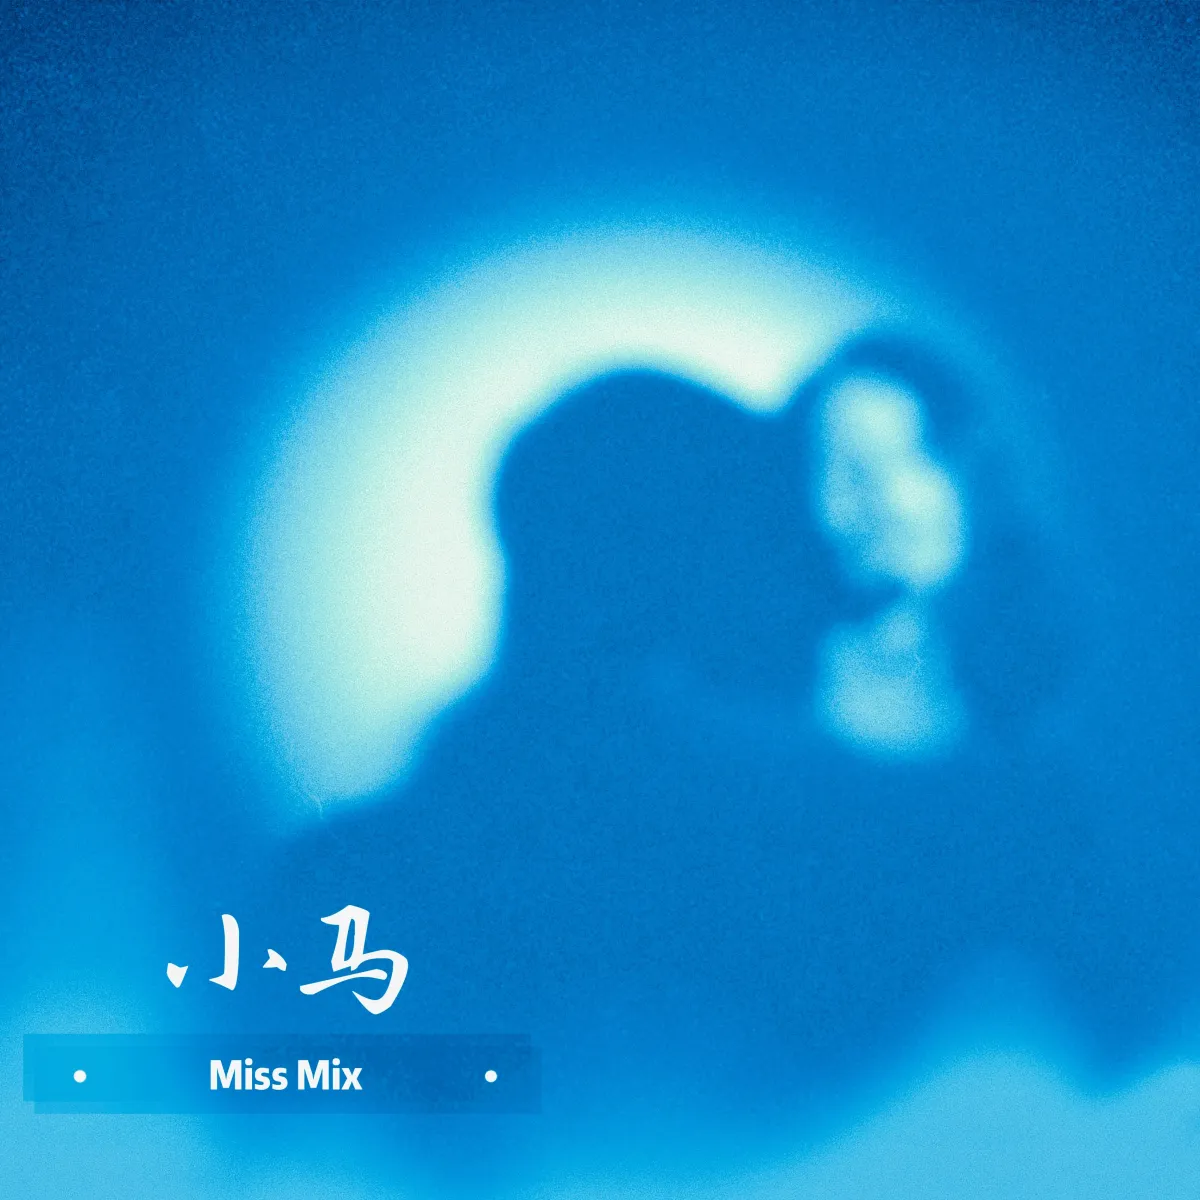 1.Miss Mix乐队《小马》单曲封面.jpg